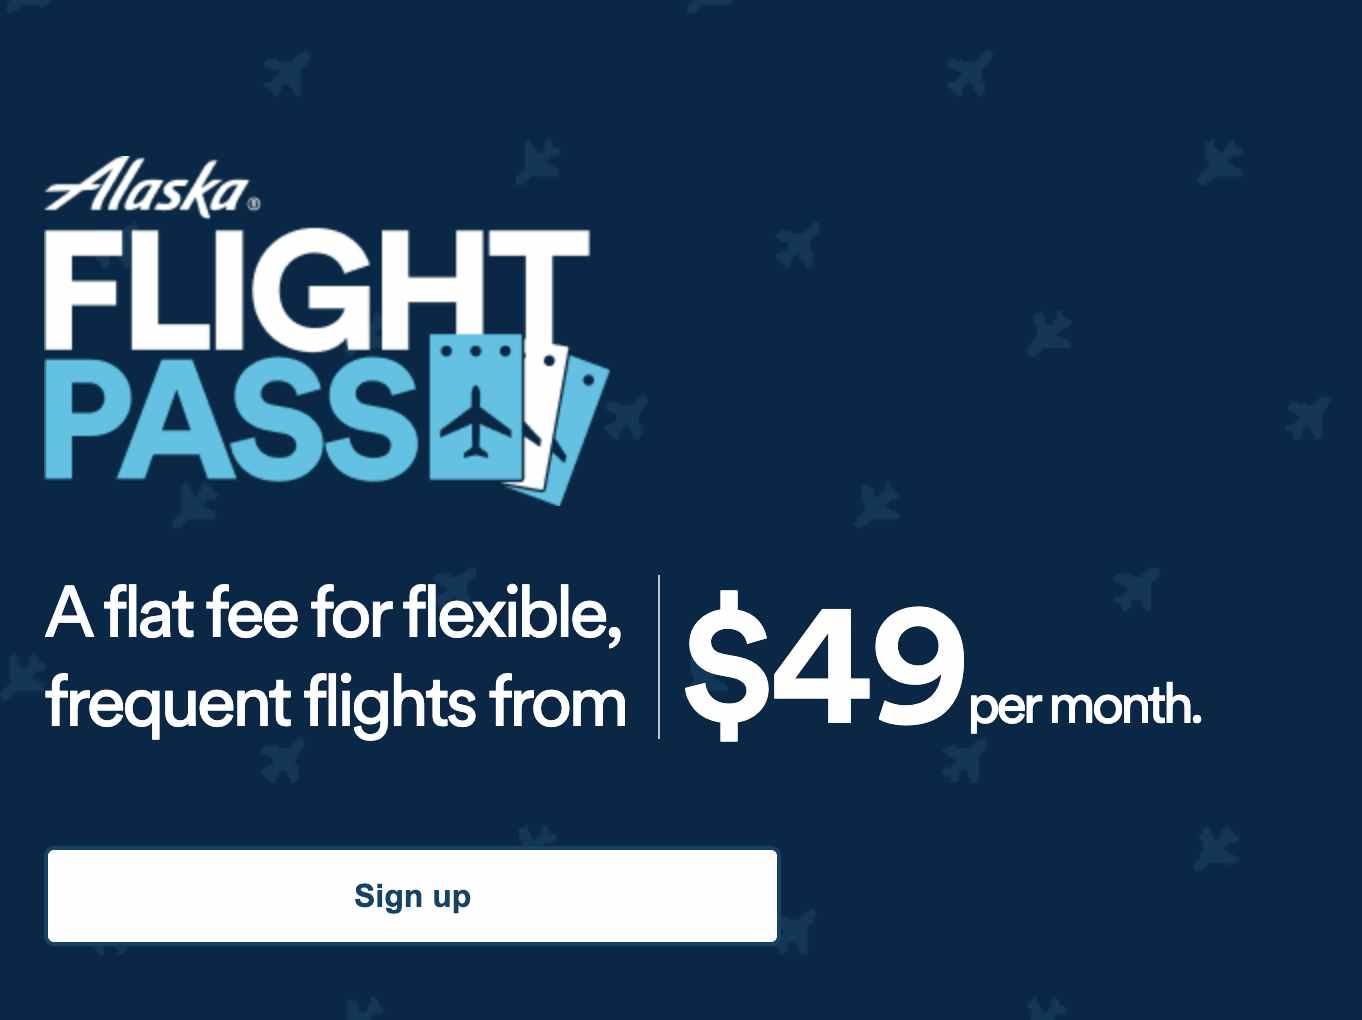 Alaska Airlines Flight Pass ad on their website